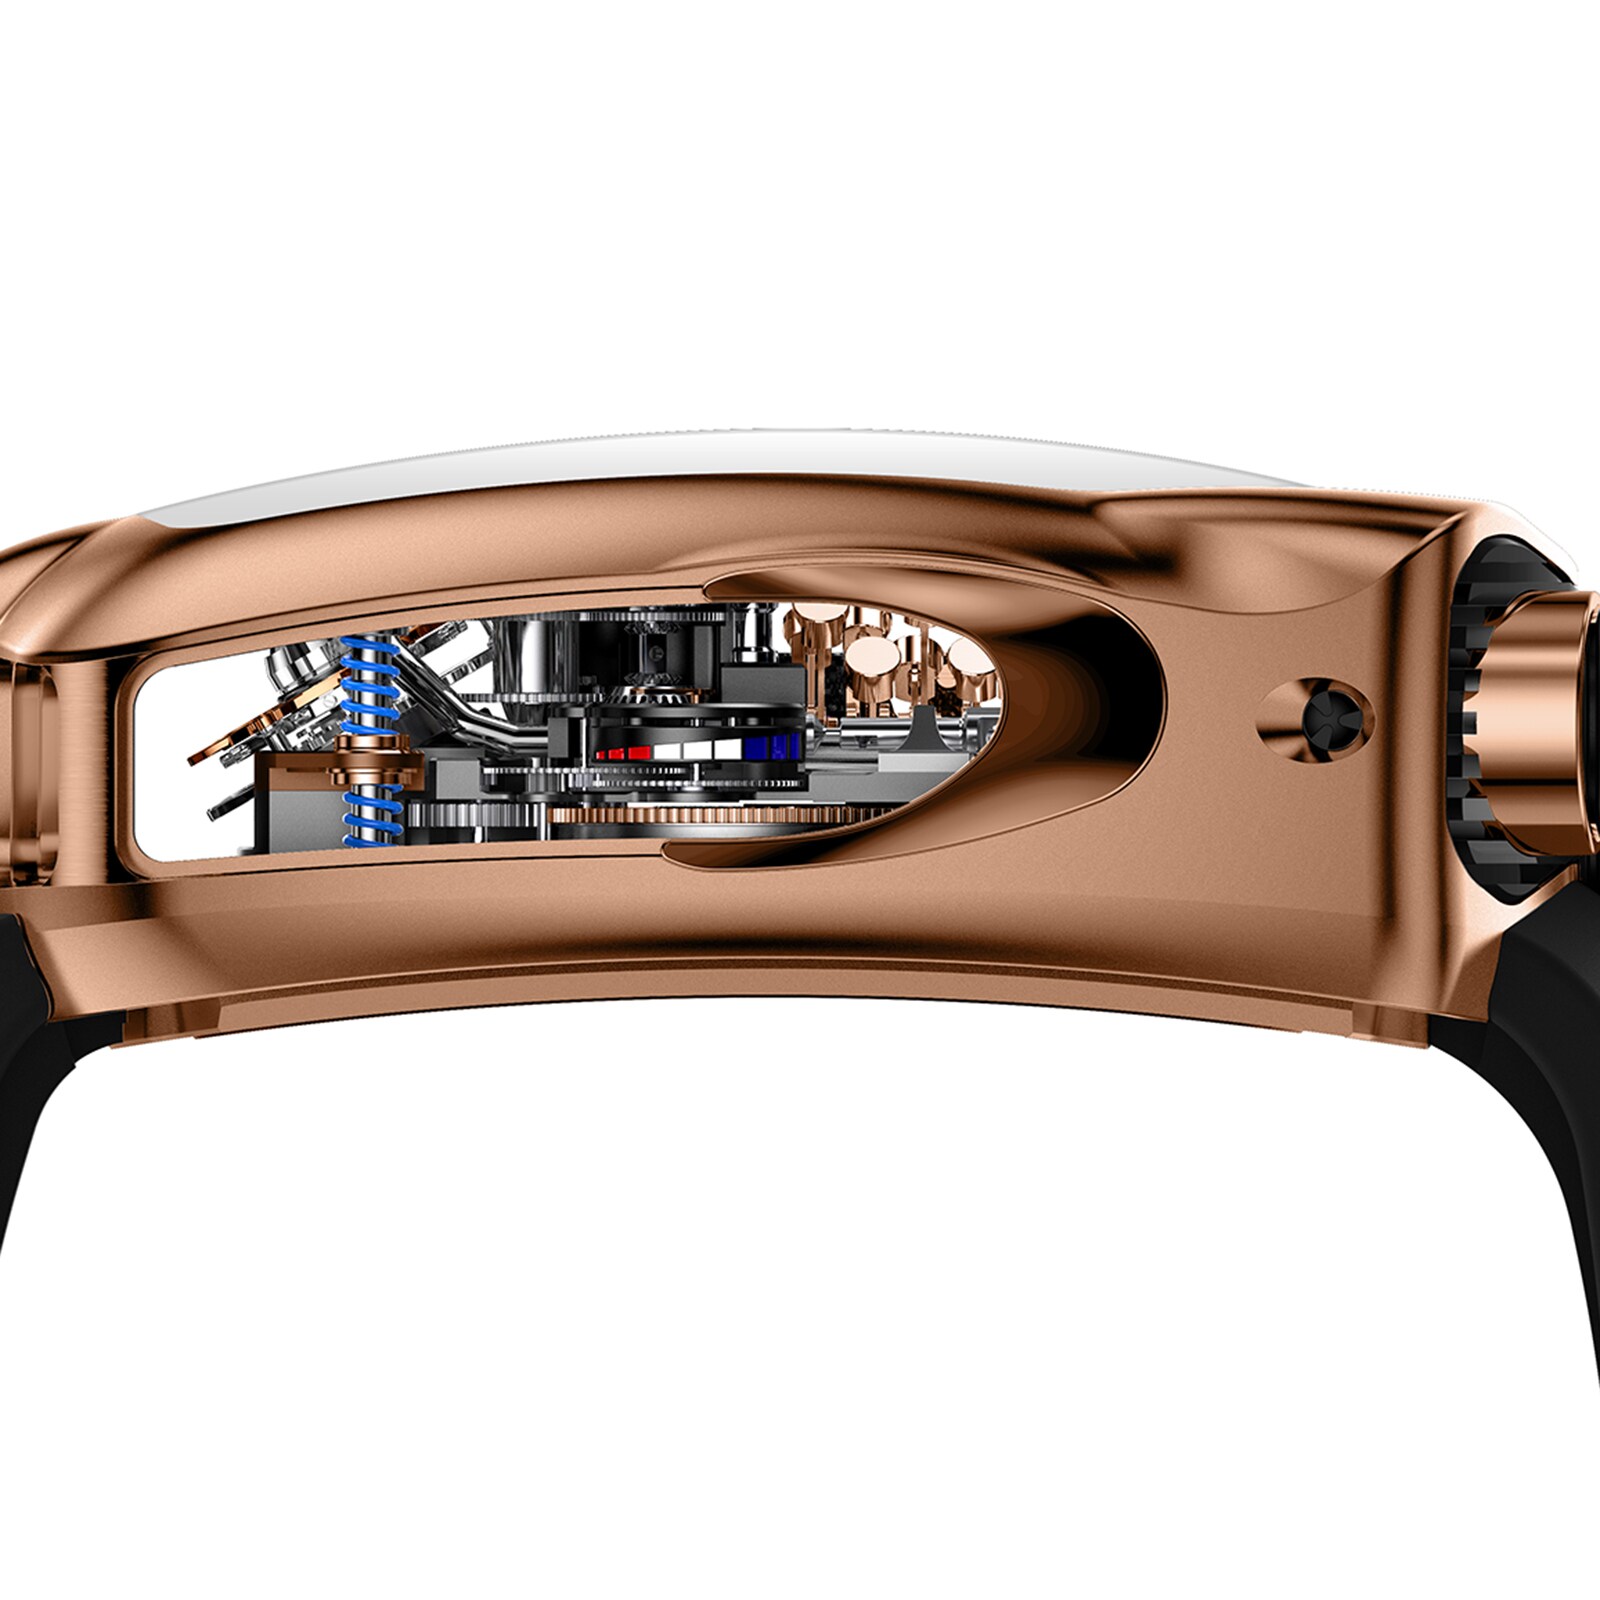 Bugatti Chiron Blue Sapphire Crystal Watch Features a W16 Engine Like Its  Namesake Car